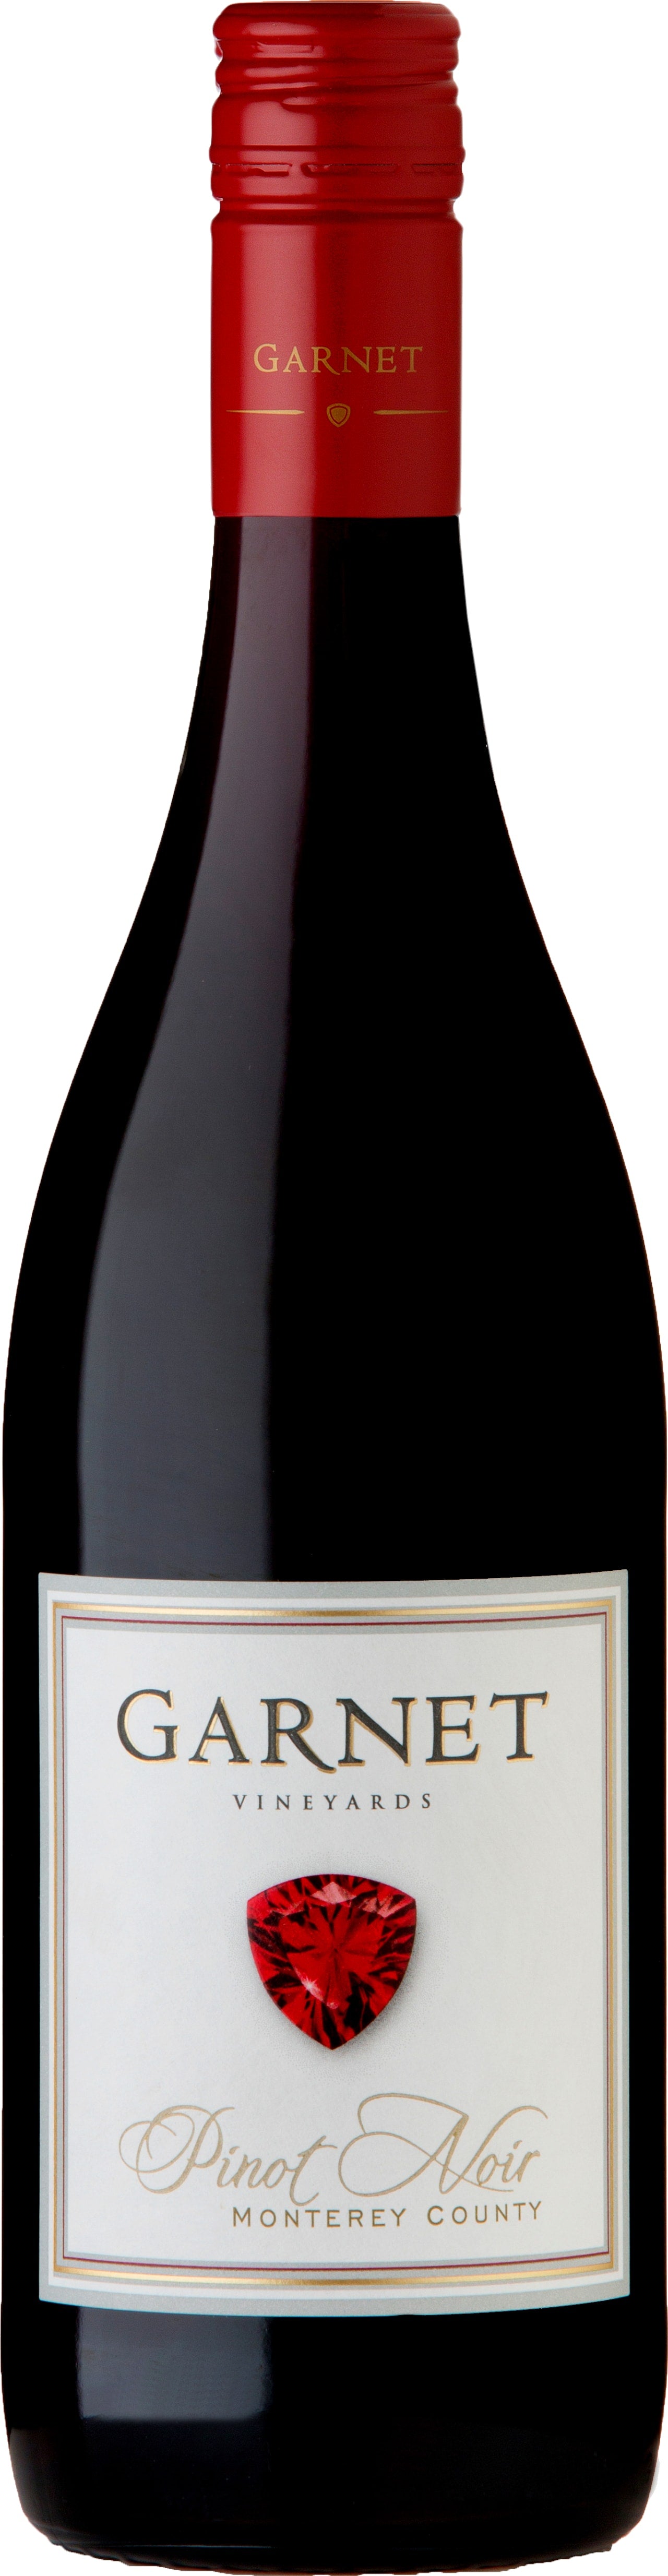 Garnet Vineyards Pinot Noir Monterey County 2016